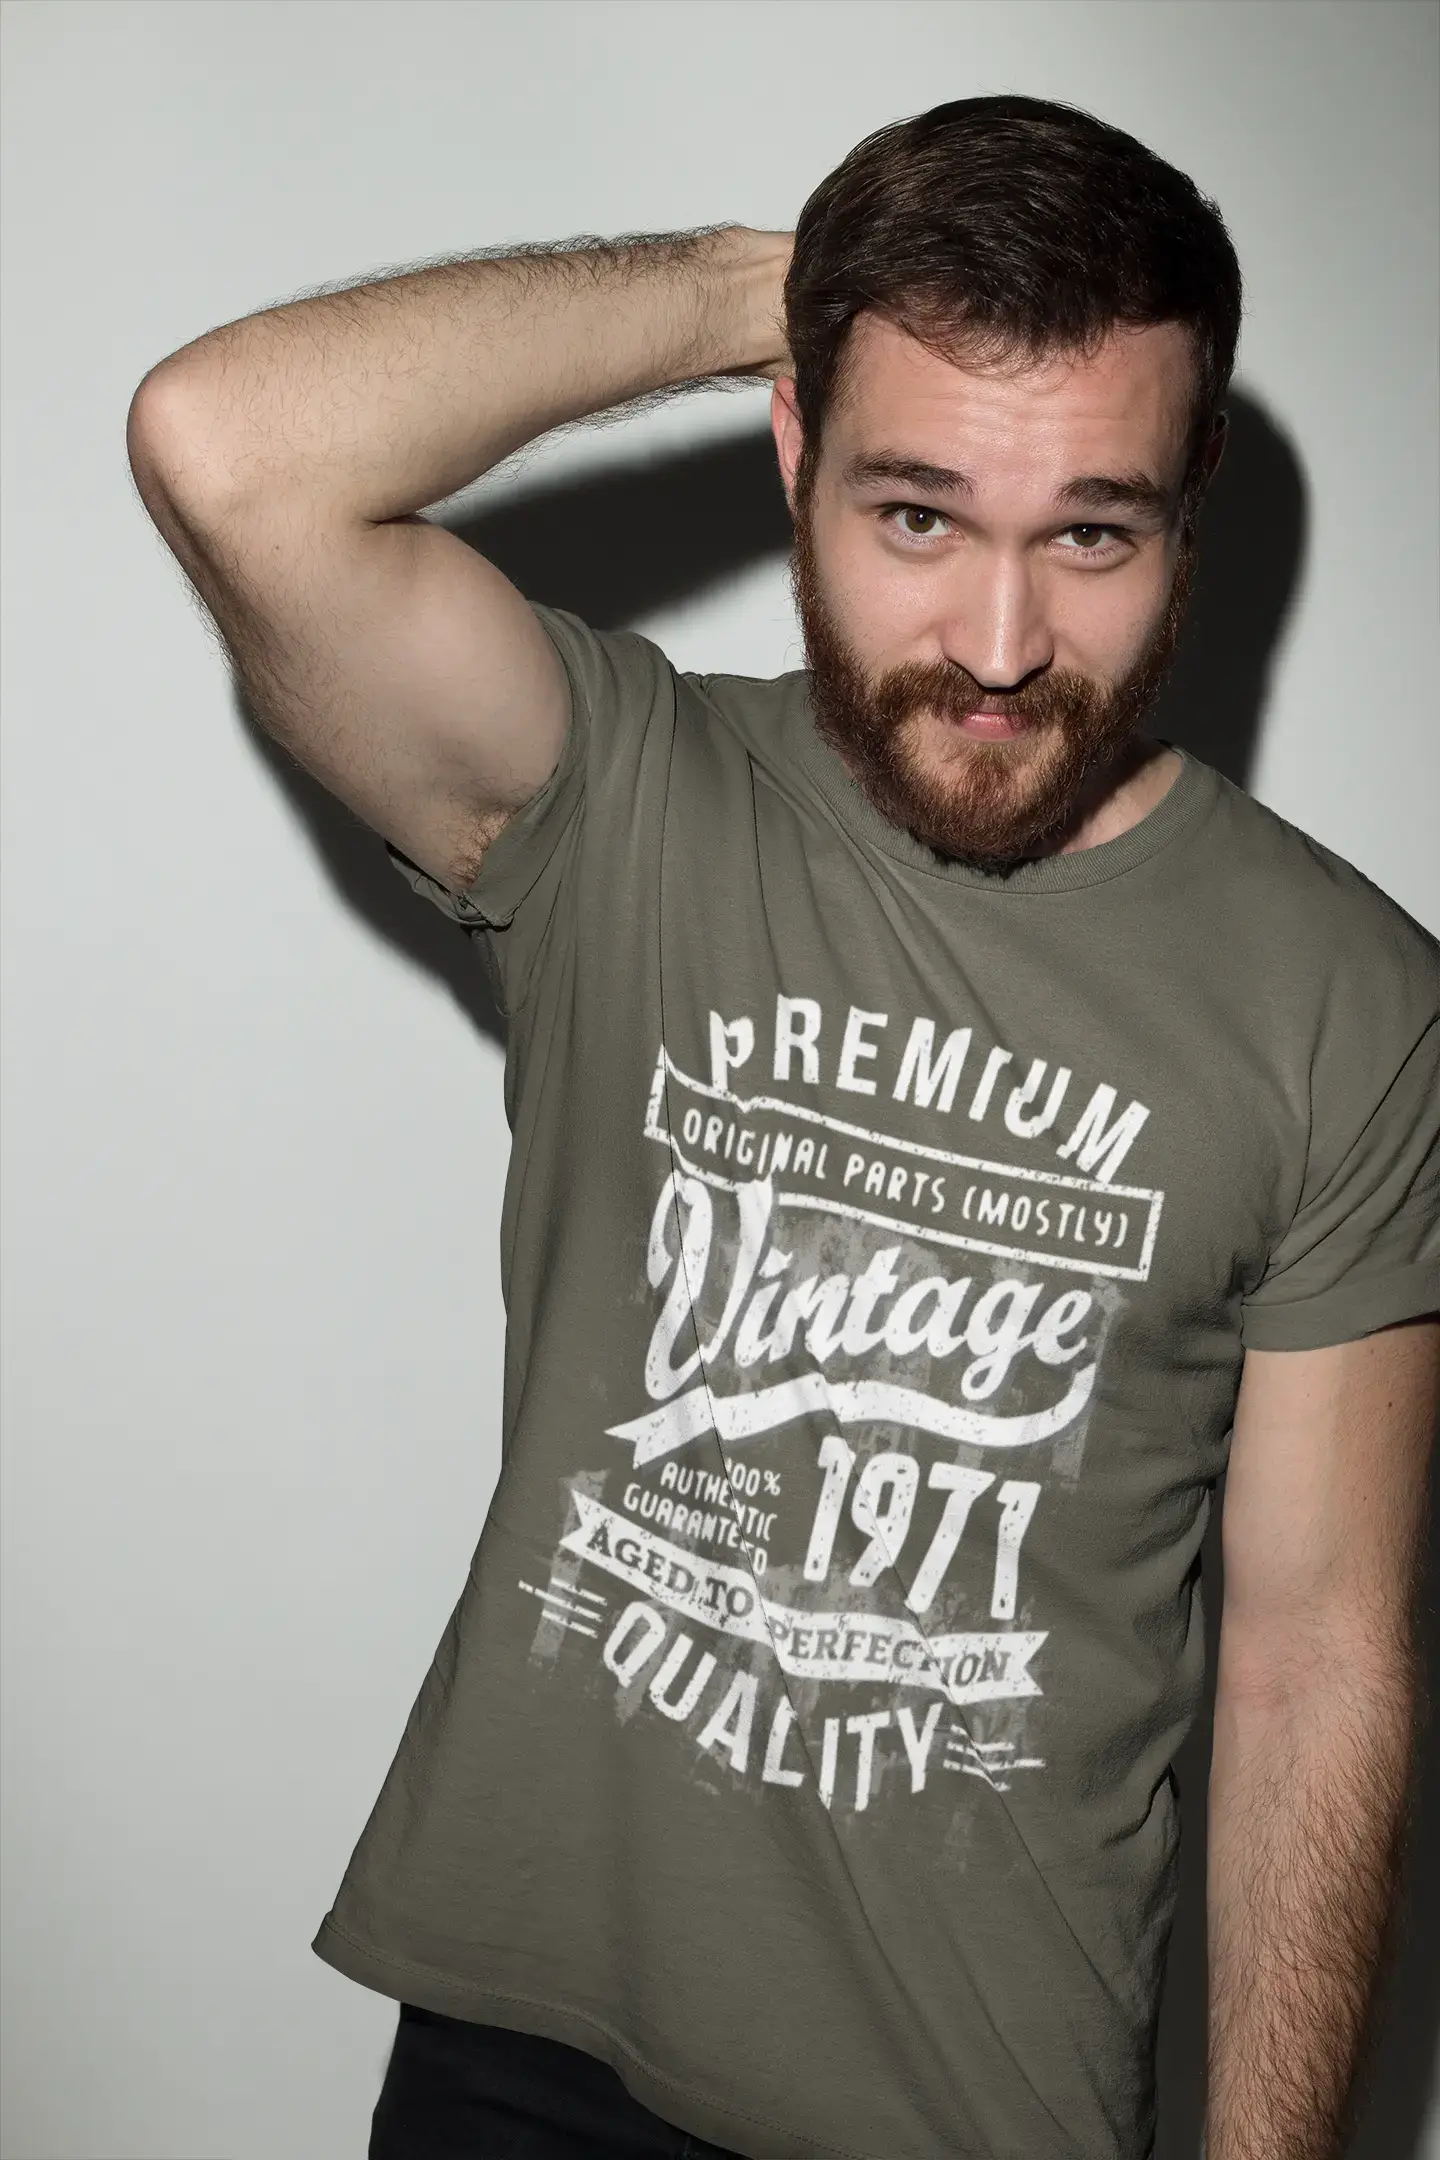 Ultrabasic - Homme T-Shirt Graphique 1971 Aged to Perfection Tee Shirt Cadeau d'anniversaire